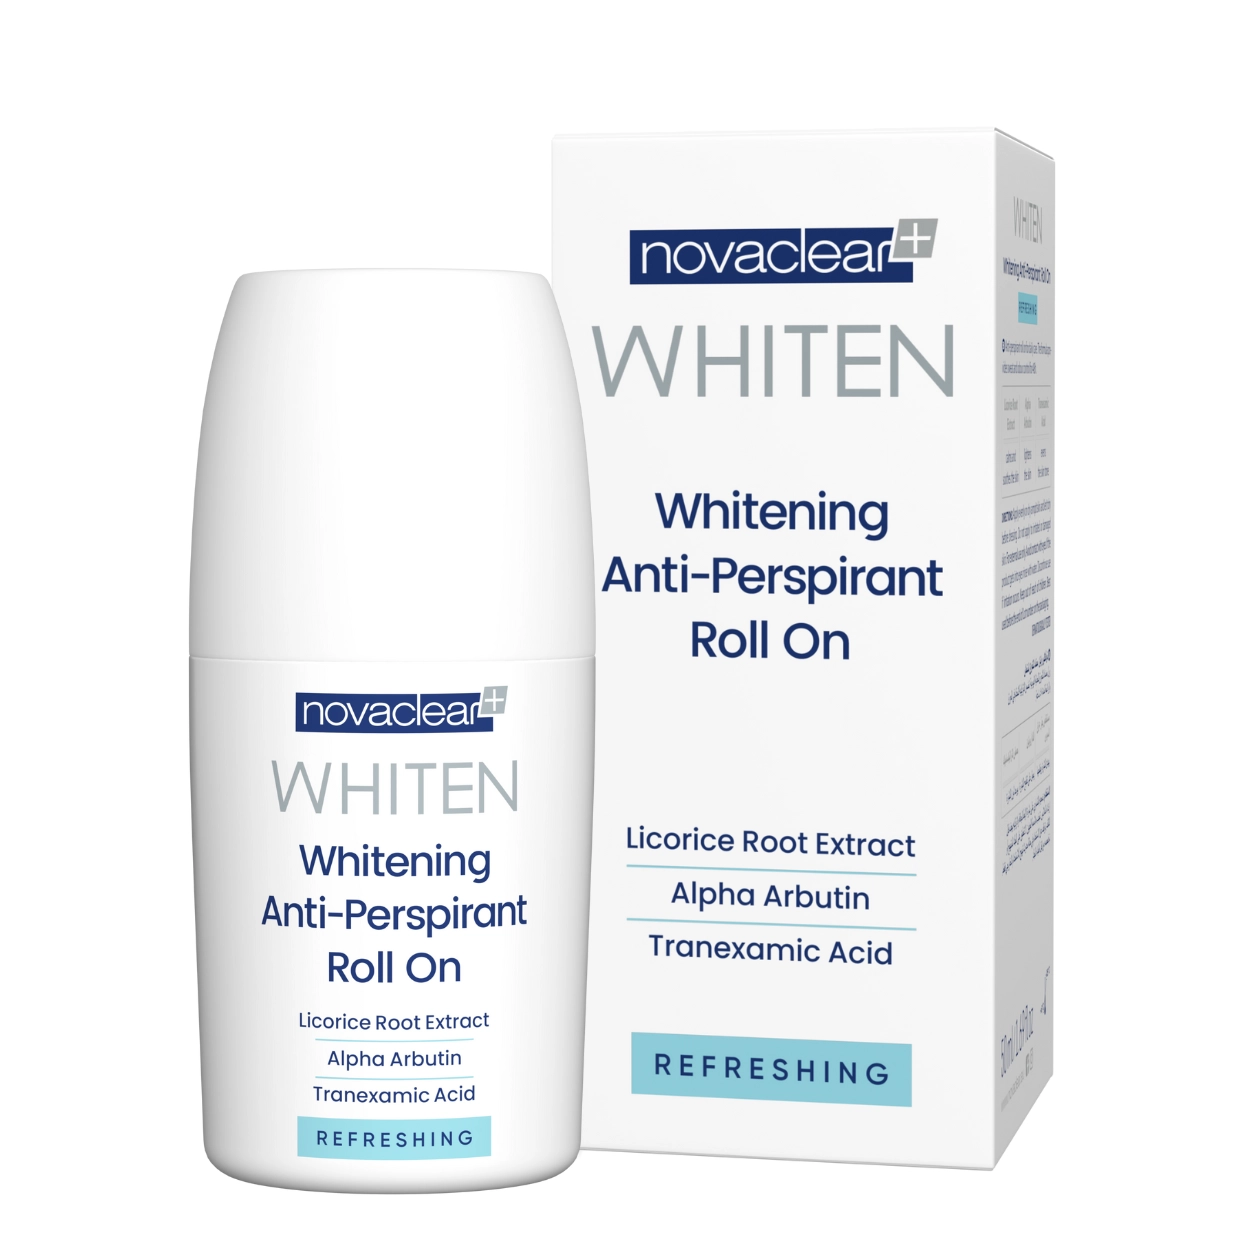 novaclear-whiten-whitening-anti-perspirant-roll-on-refreshing